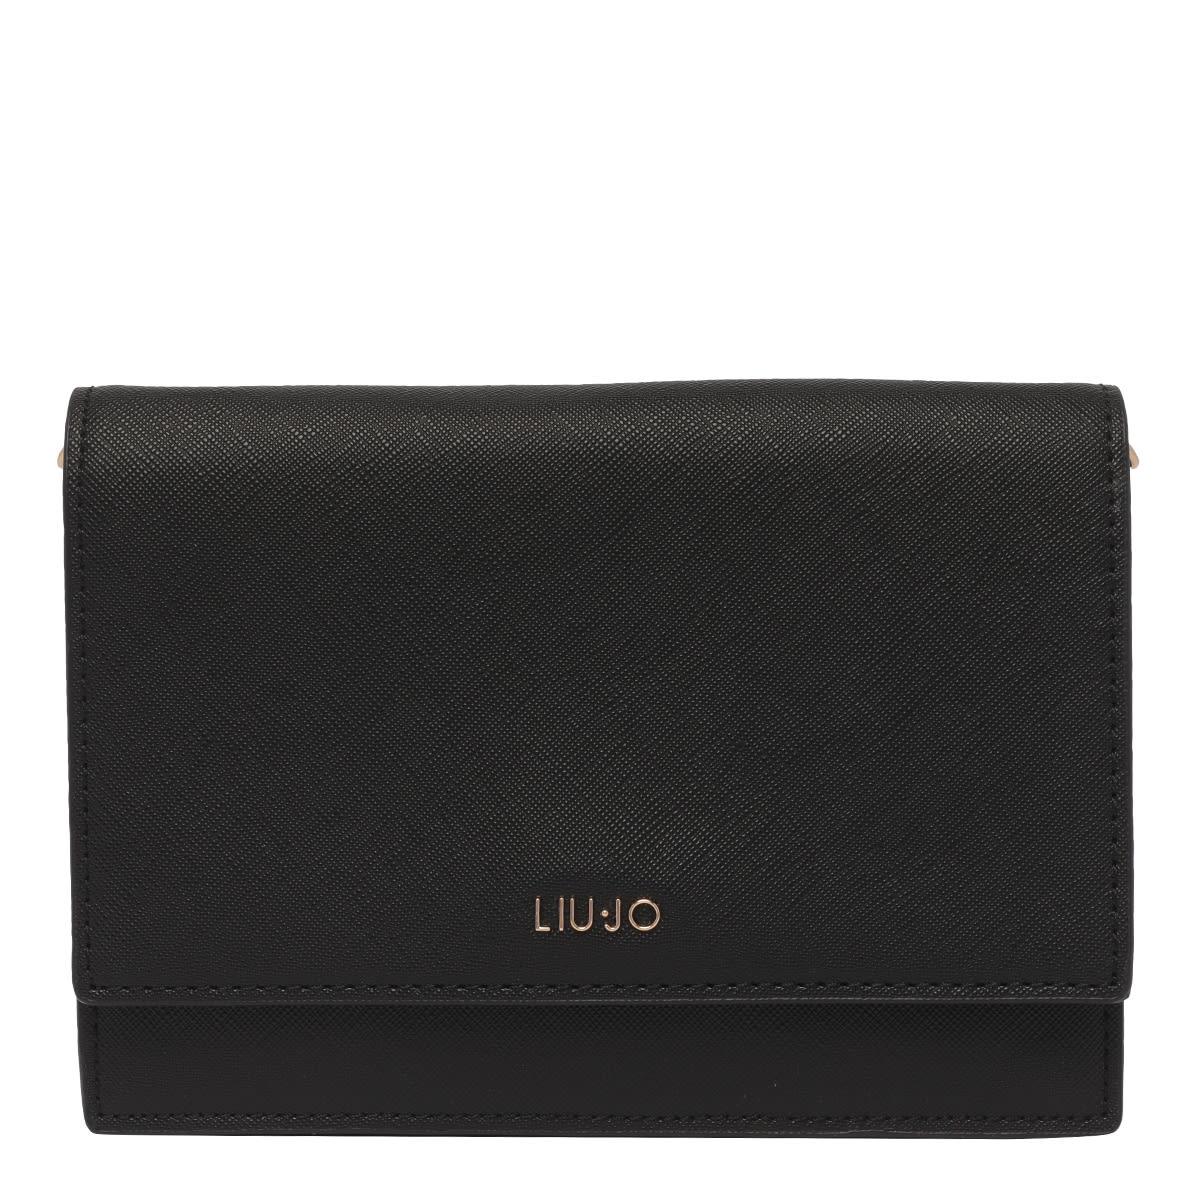 Liu Jo Logo Crossbody Bag in Black | Lyst